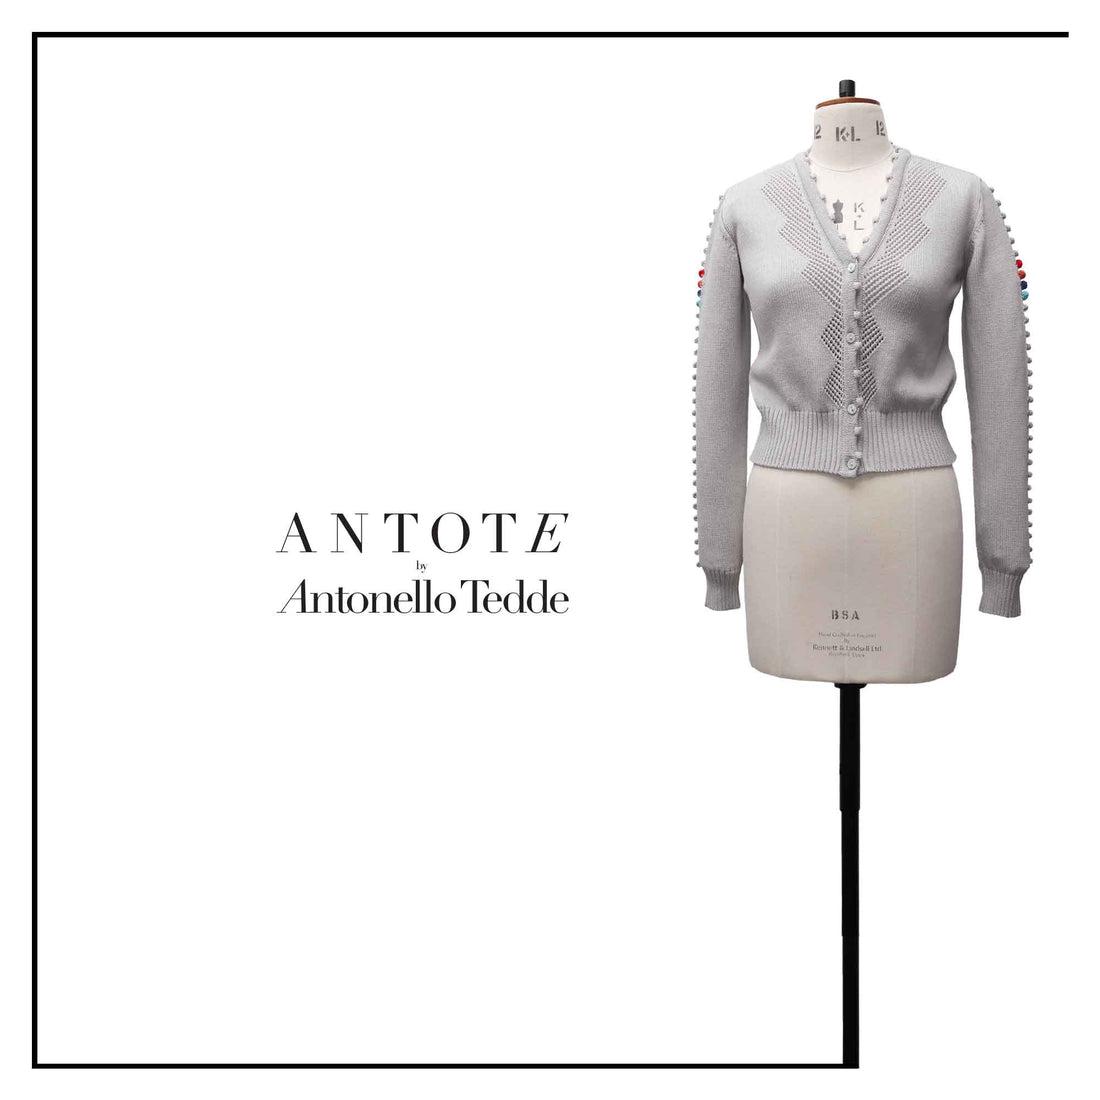 ANTOTE by Antonello Tedde  knitwear poms